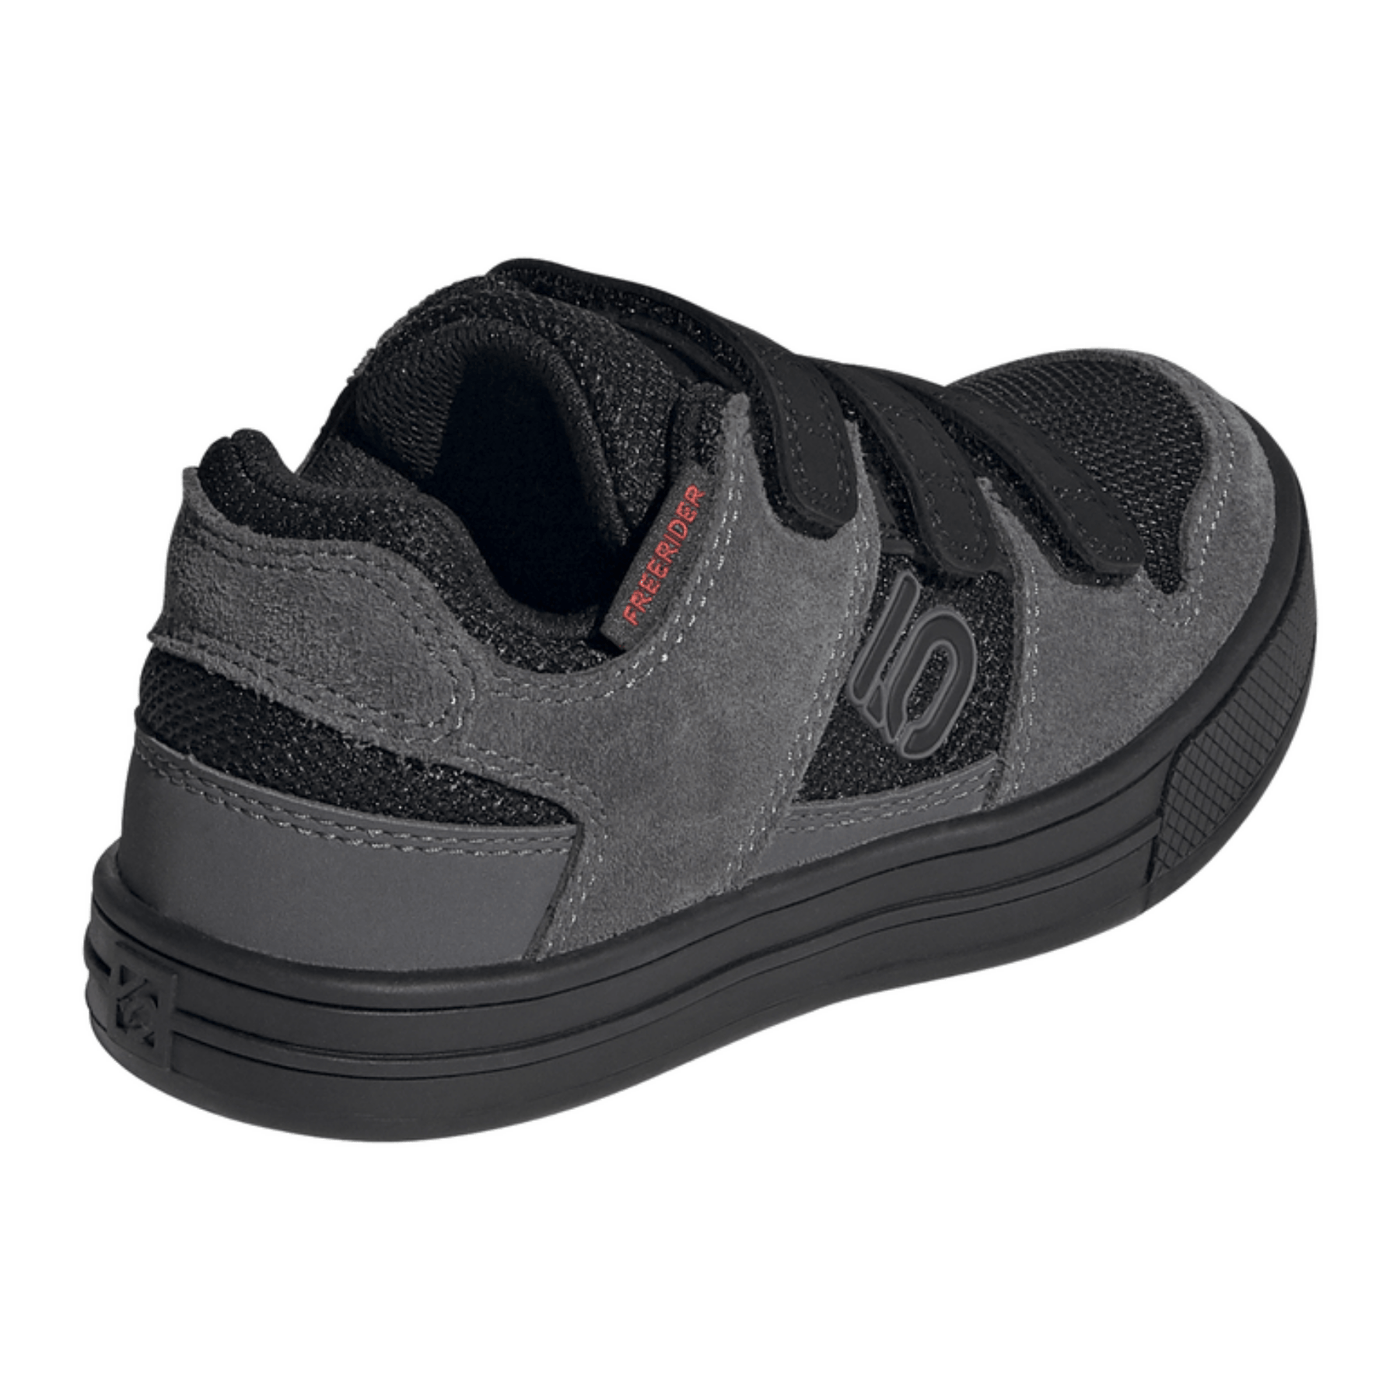 Five Ten Kids Shoes Freerider VCS - Black/Gray